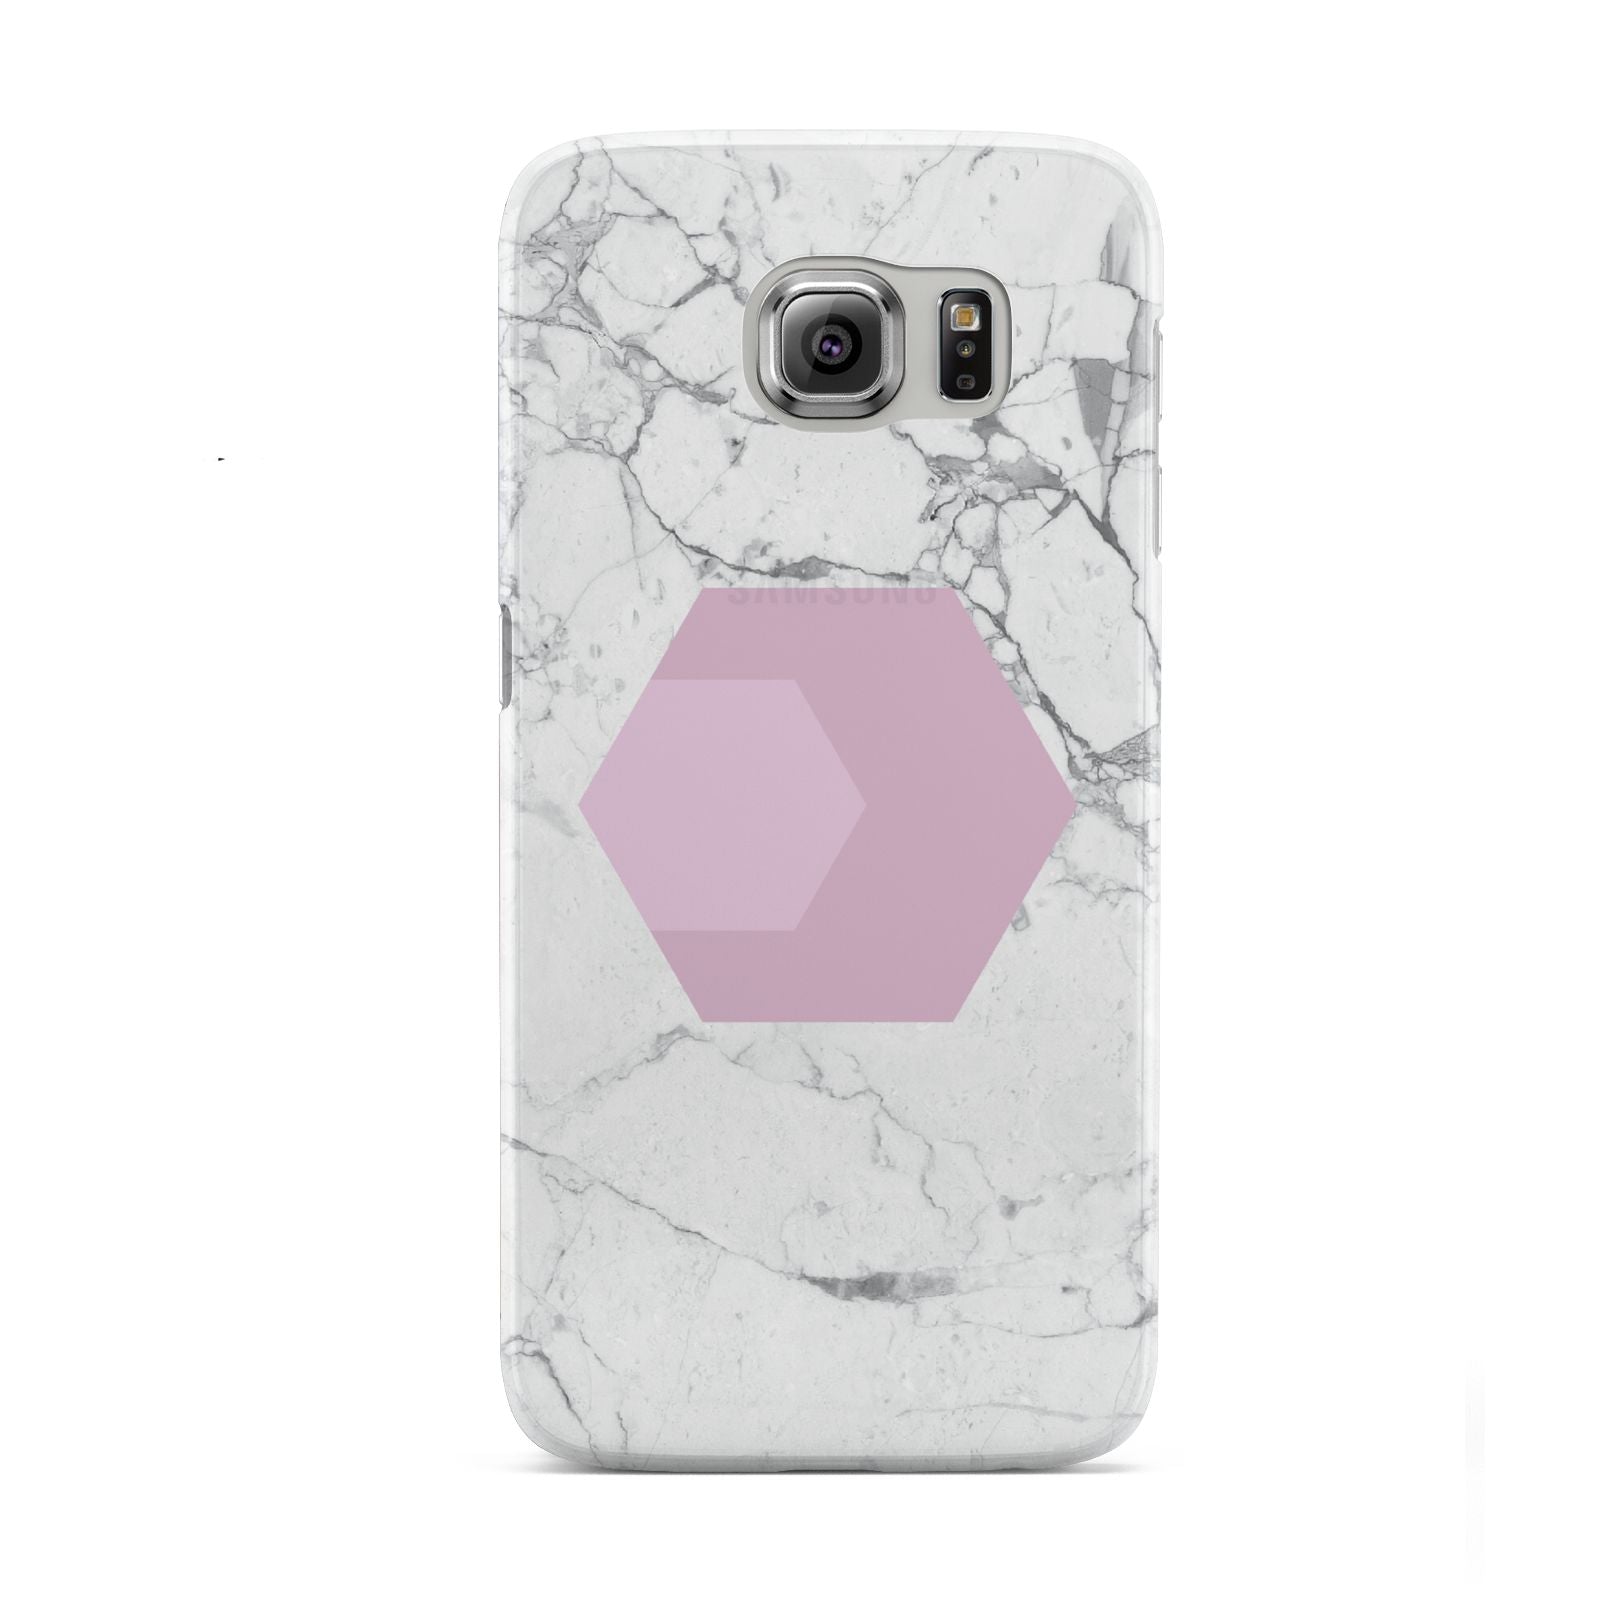 Marble White Grey Carrara Samsung Galaxy S6 Case